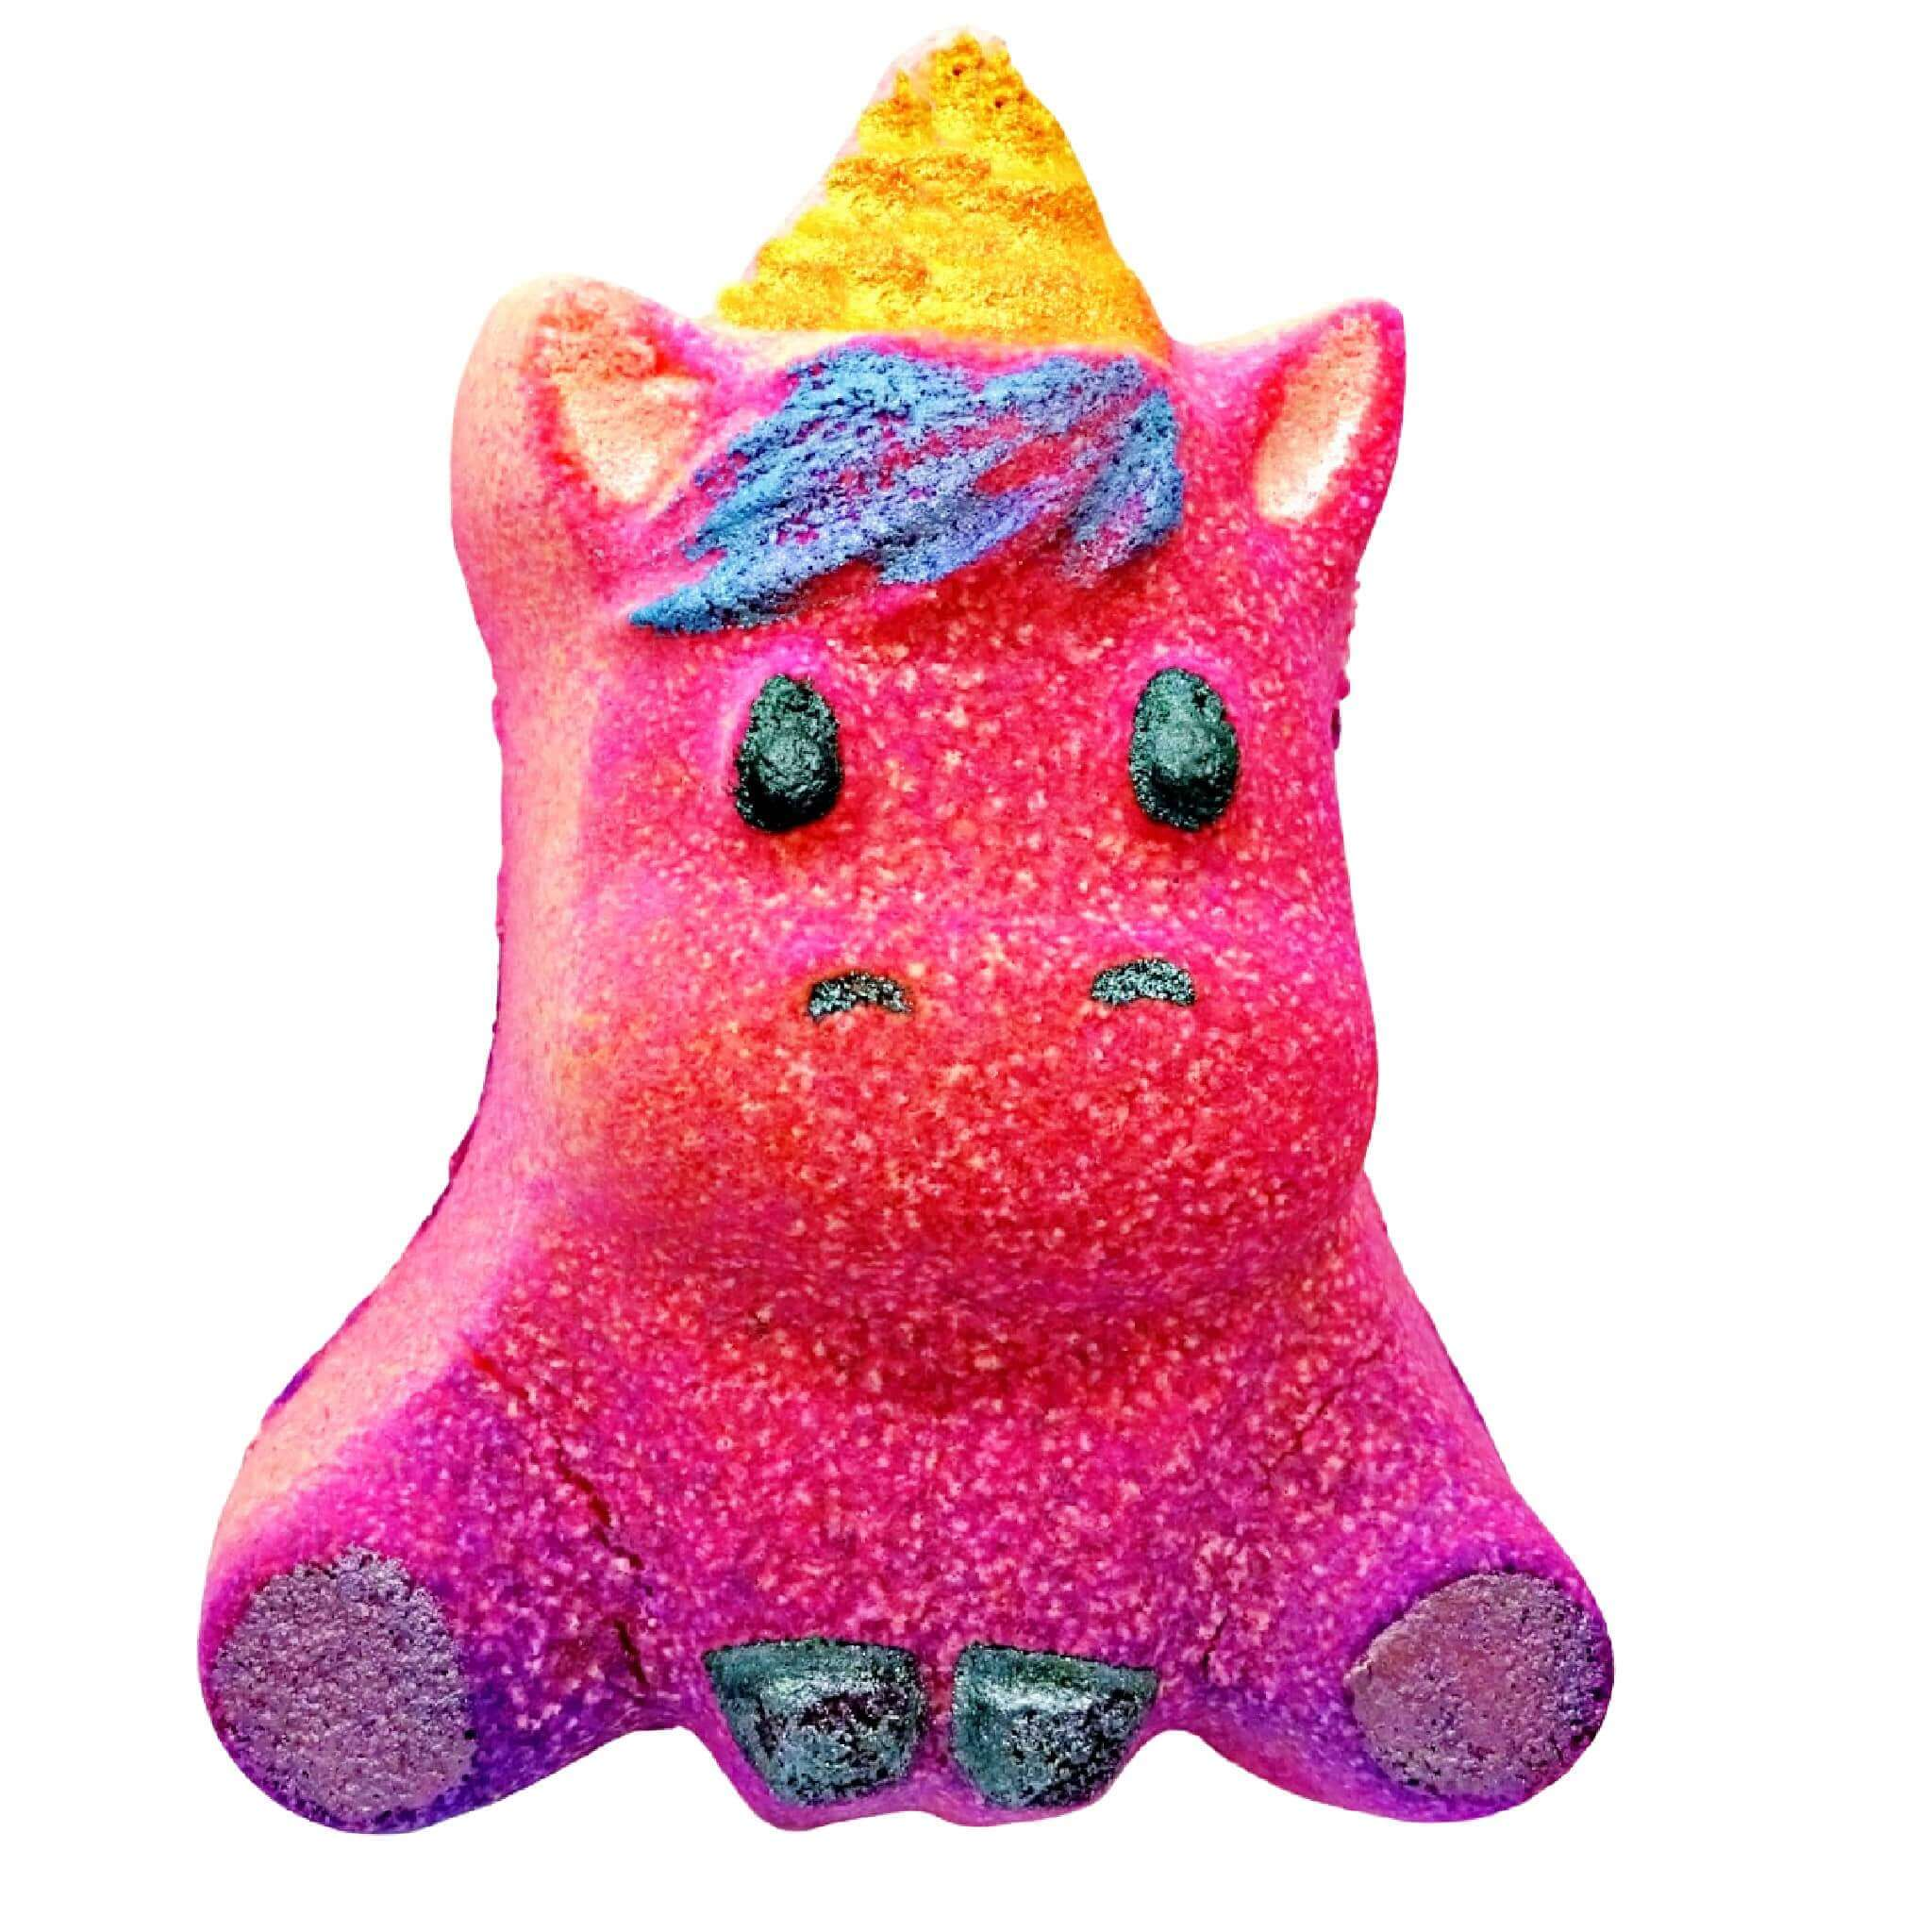 raspberry-lemonade-fizzy-unicorn-bomb-vegan-6pk